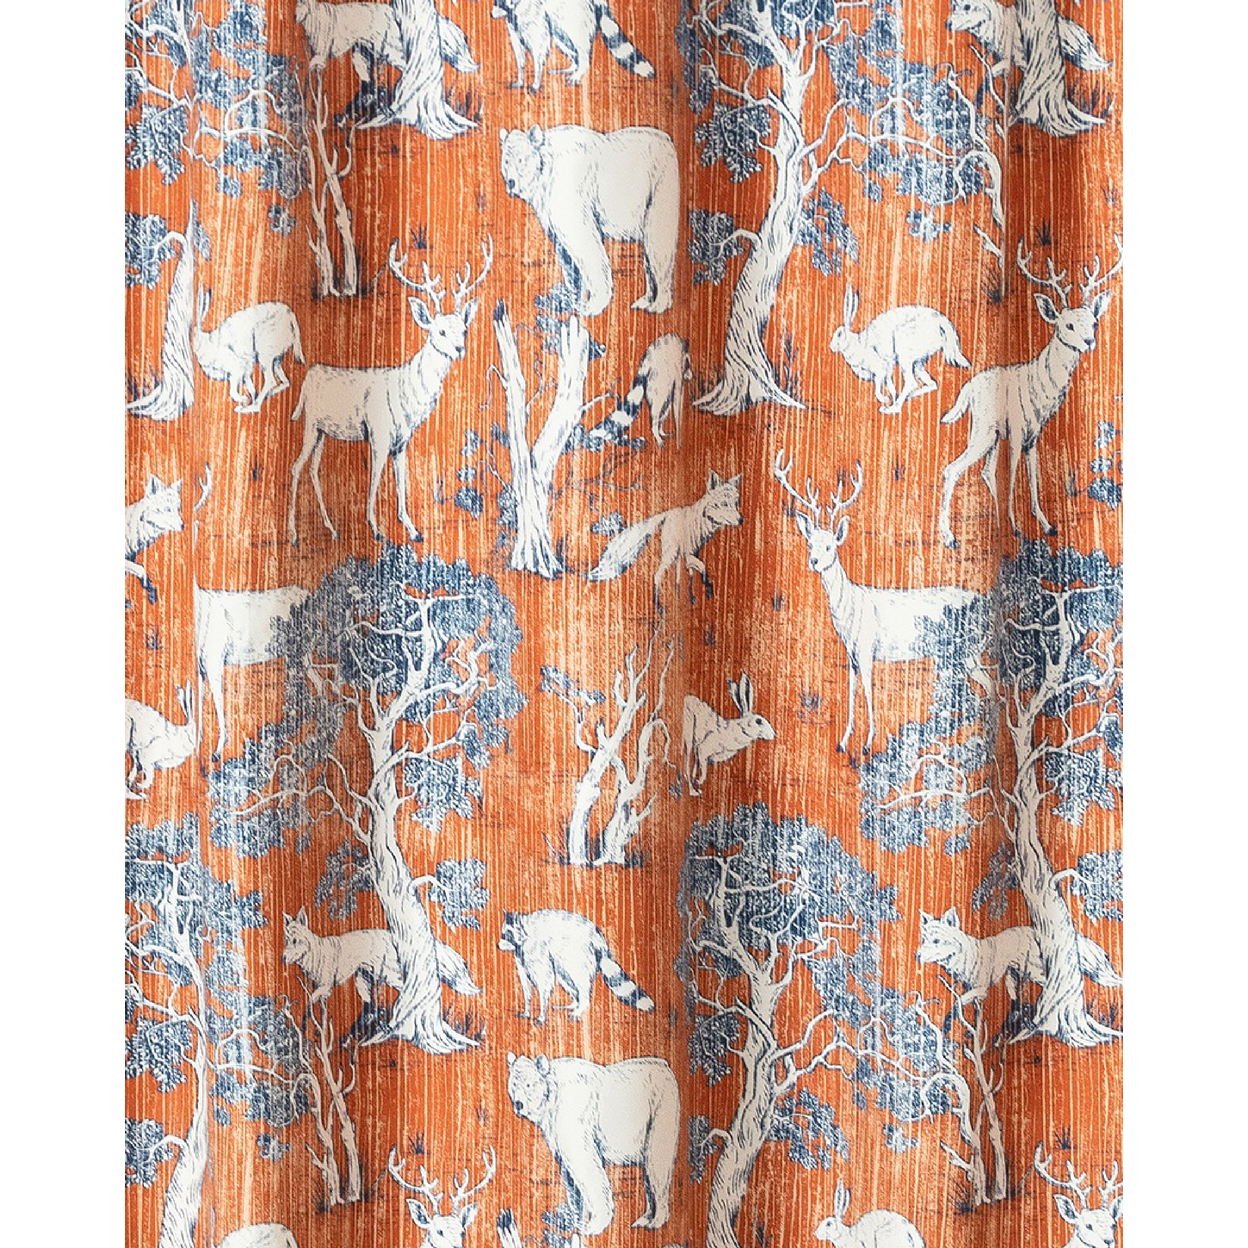 Gin 72 Inch Shower Curtain, Fun Deer And Bears Print, Orange Microfiber